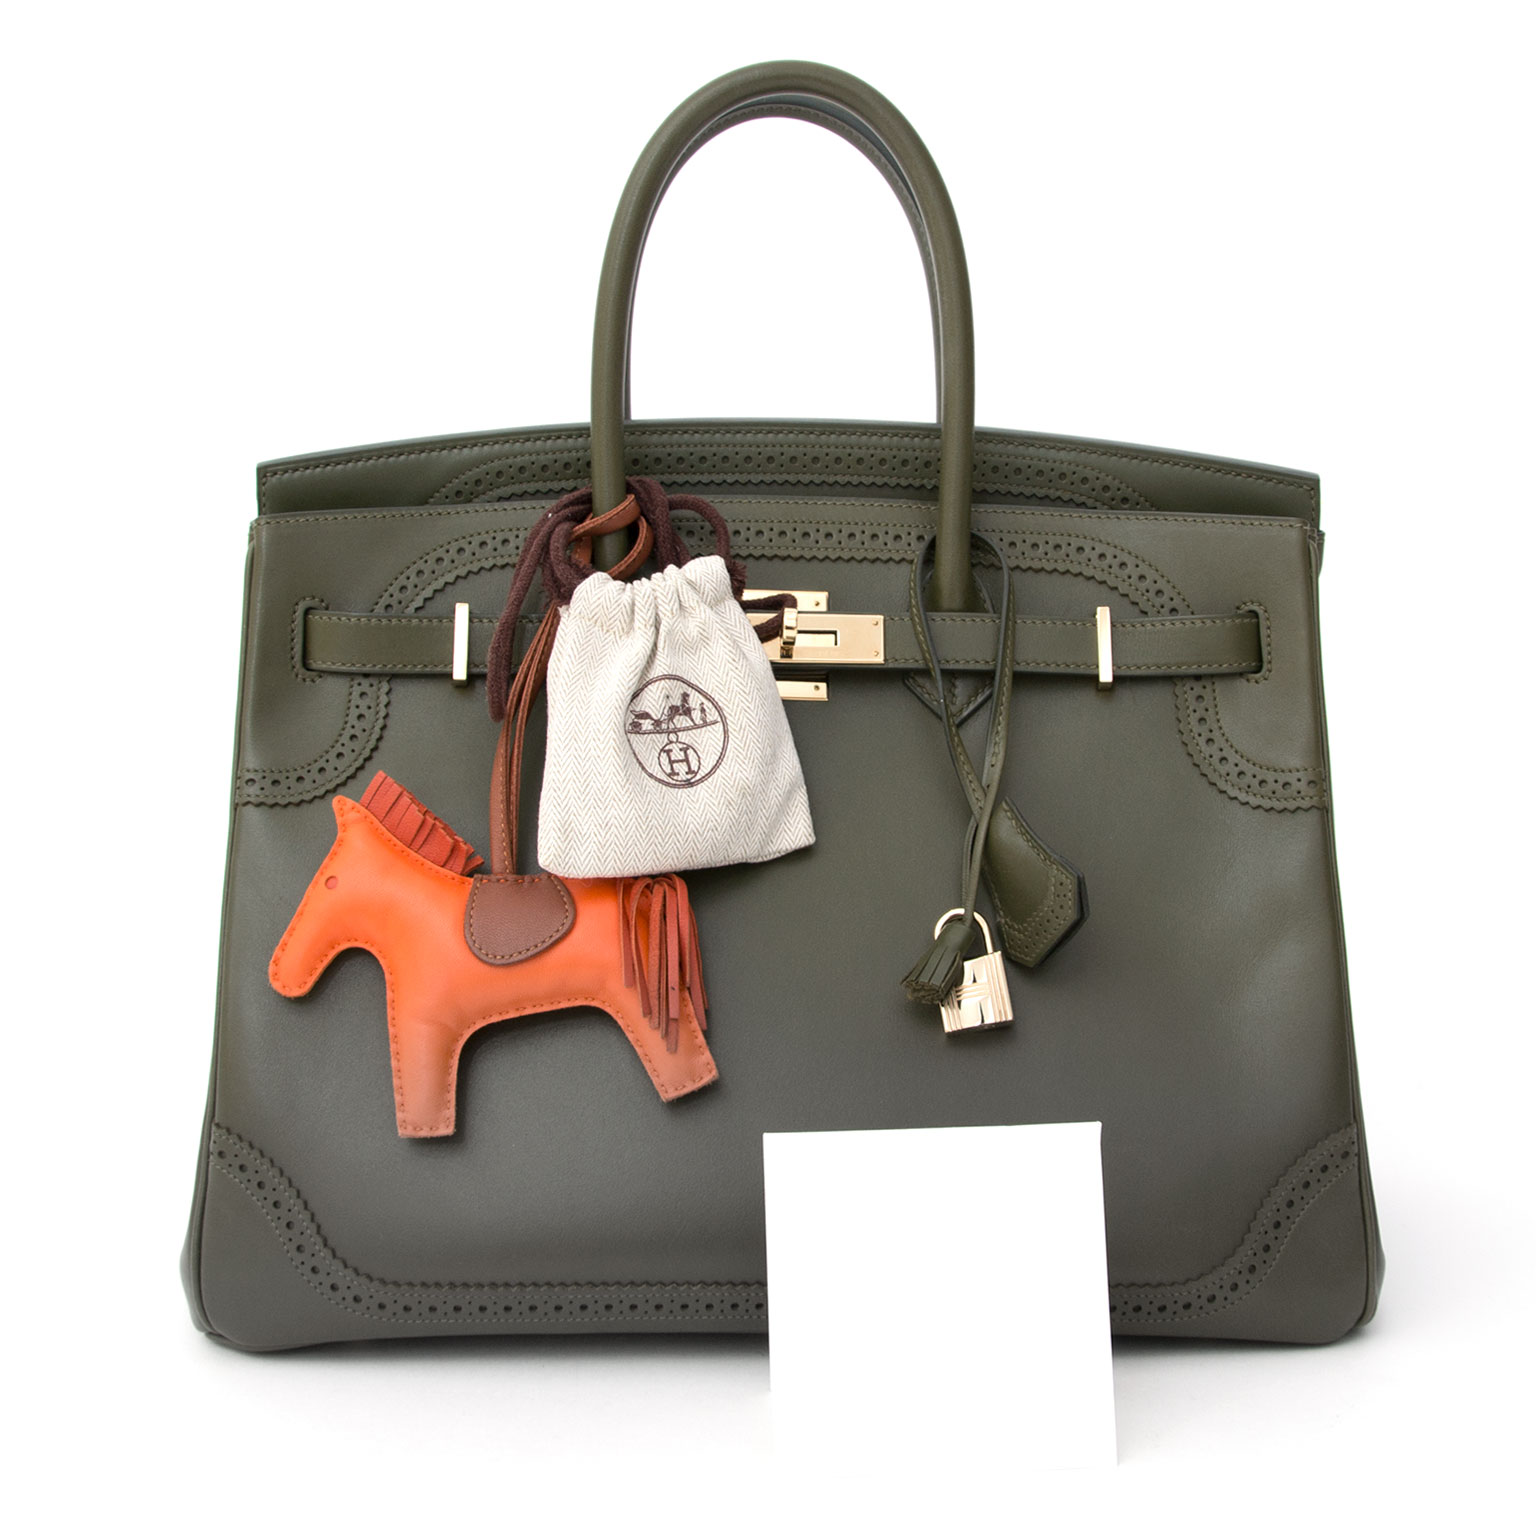 Shop Authentic Vintage Luxury Designer Handbags Online. Vind ...  